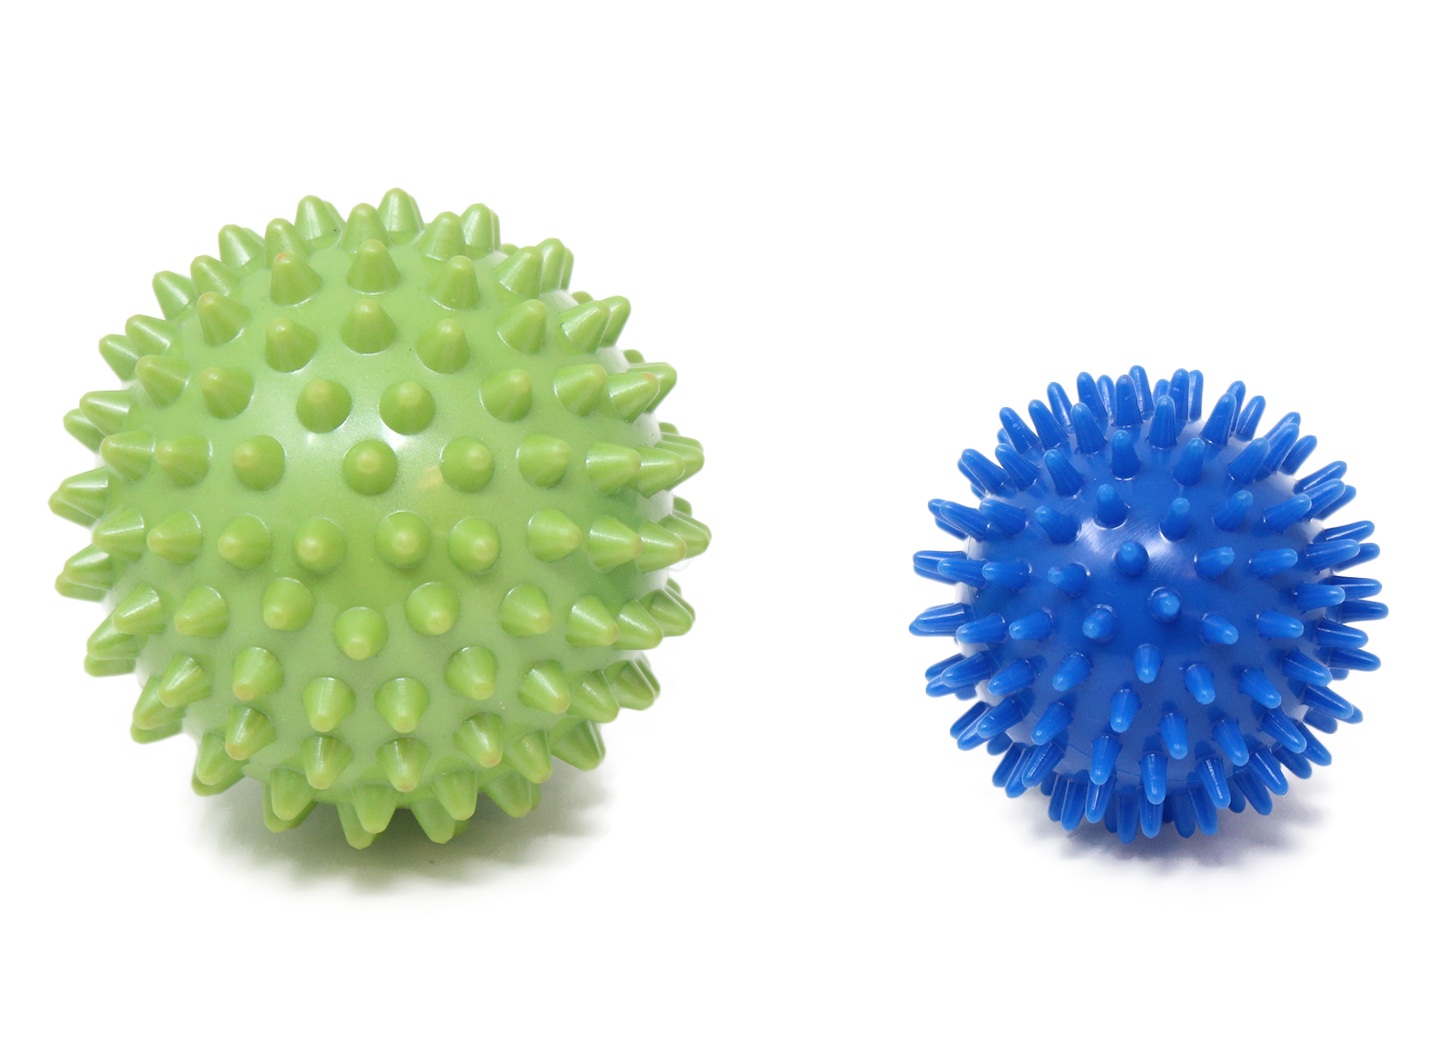 Spiky Massage Balls